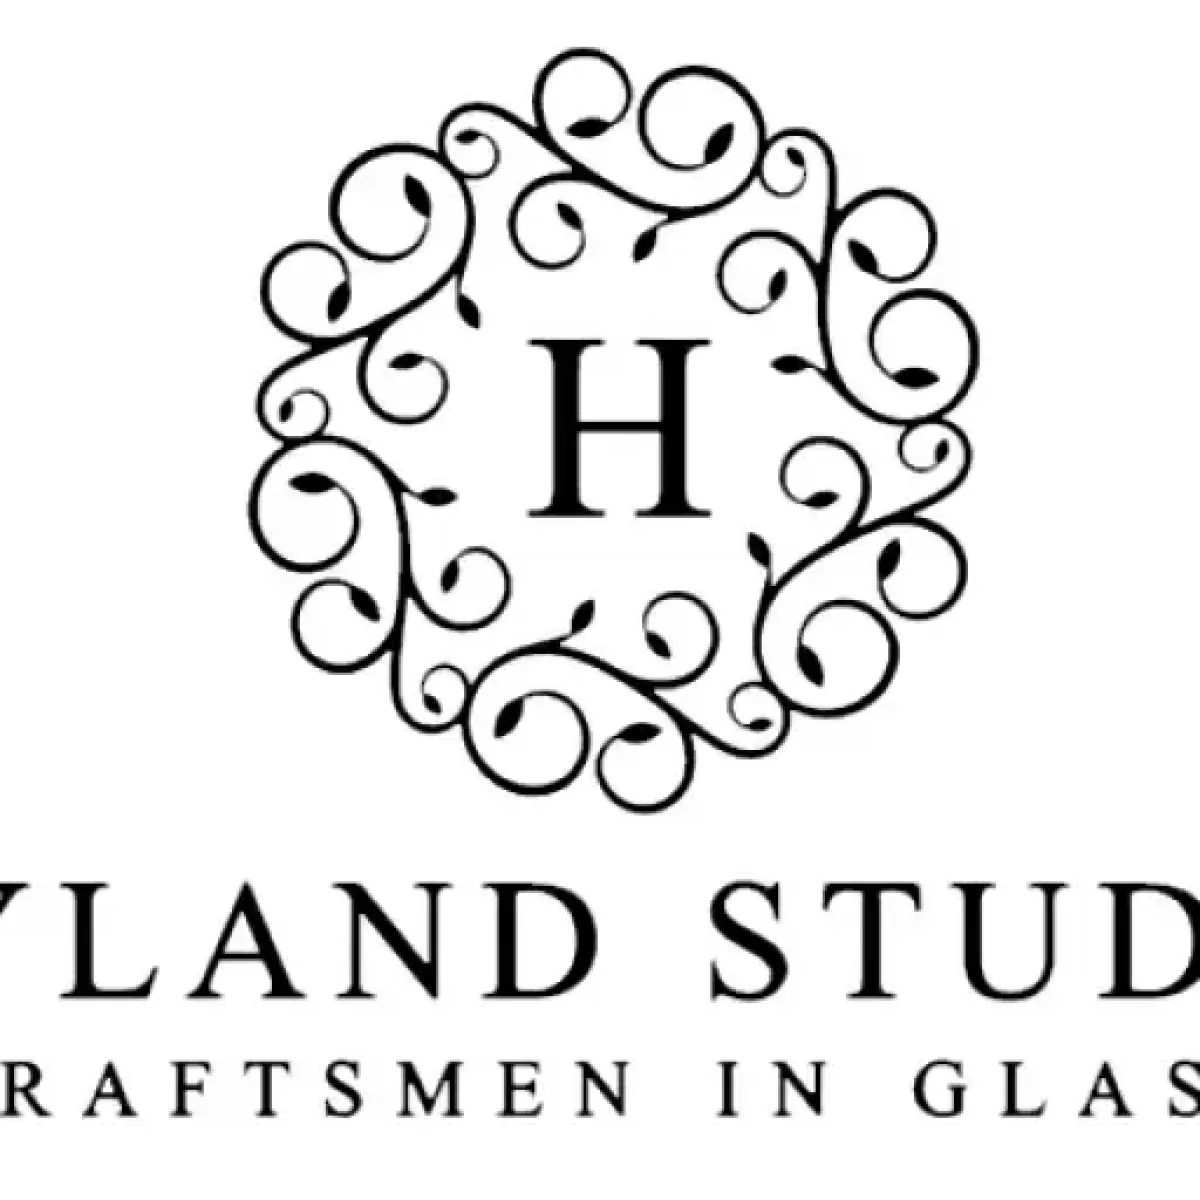 Classified Hyland Studio